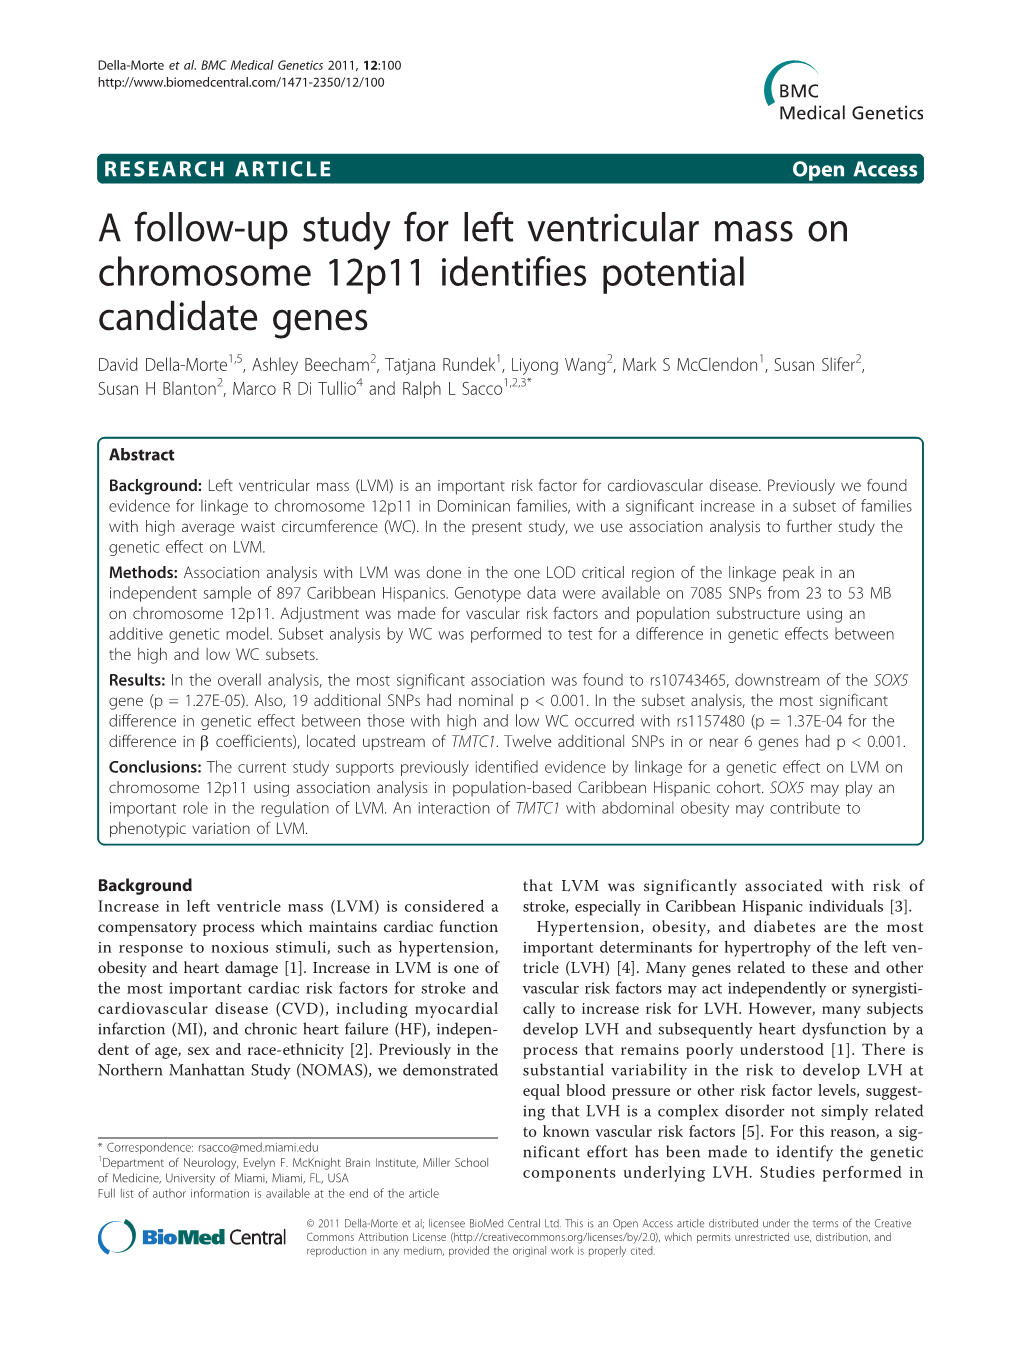 A Follow-Up Study for Left Ventricular Mass on Chromosome 12P11